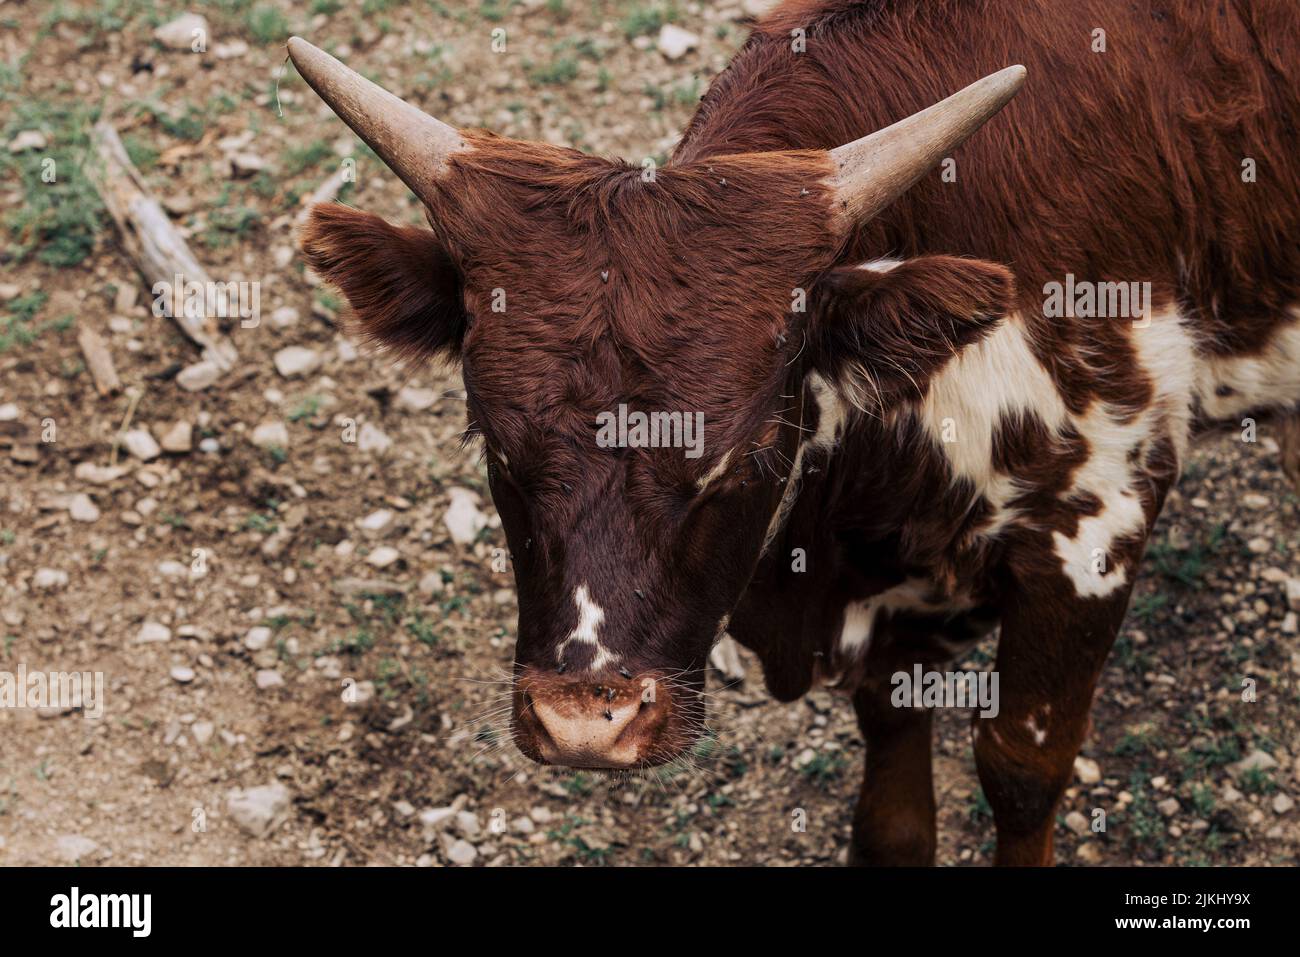 Big Bull standing with short poity horns Stock Photo